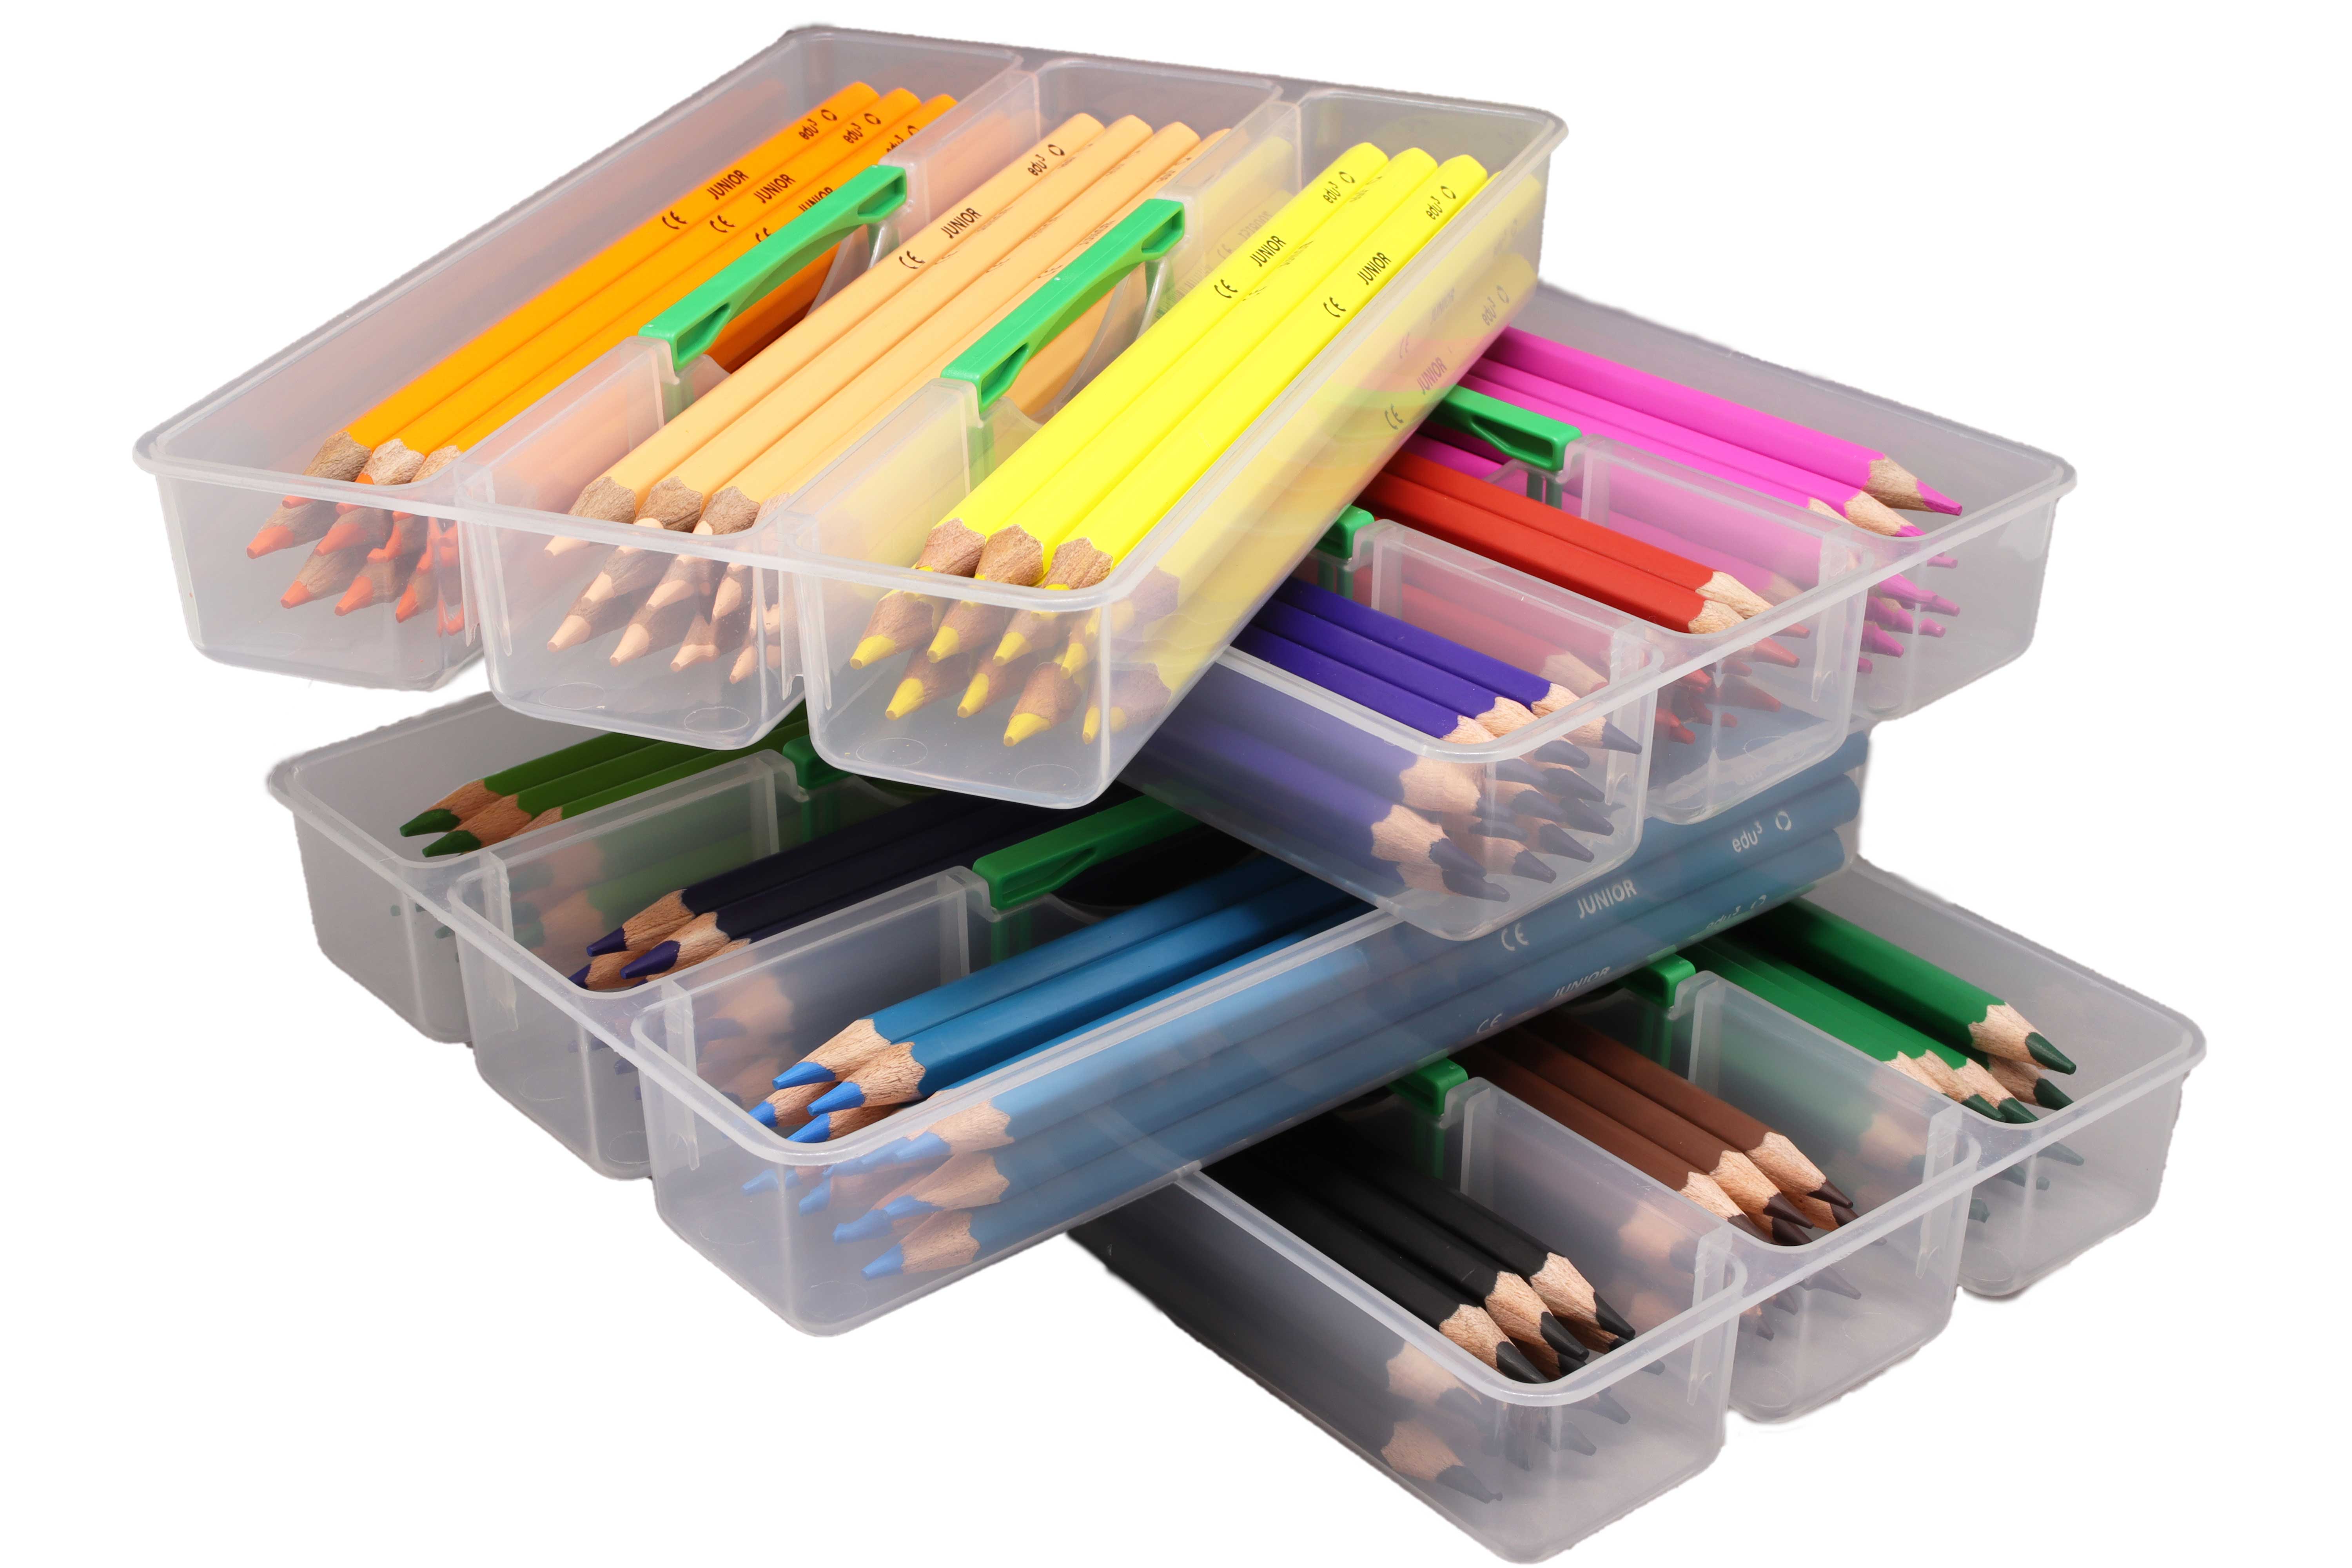 edu³ JUNIOR colored pencils hex School box